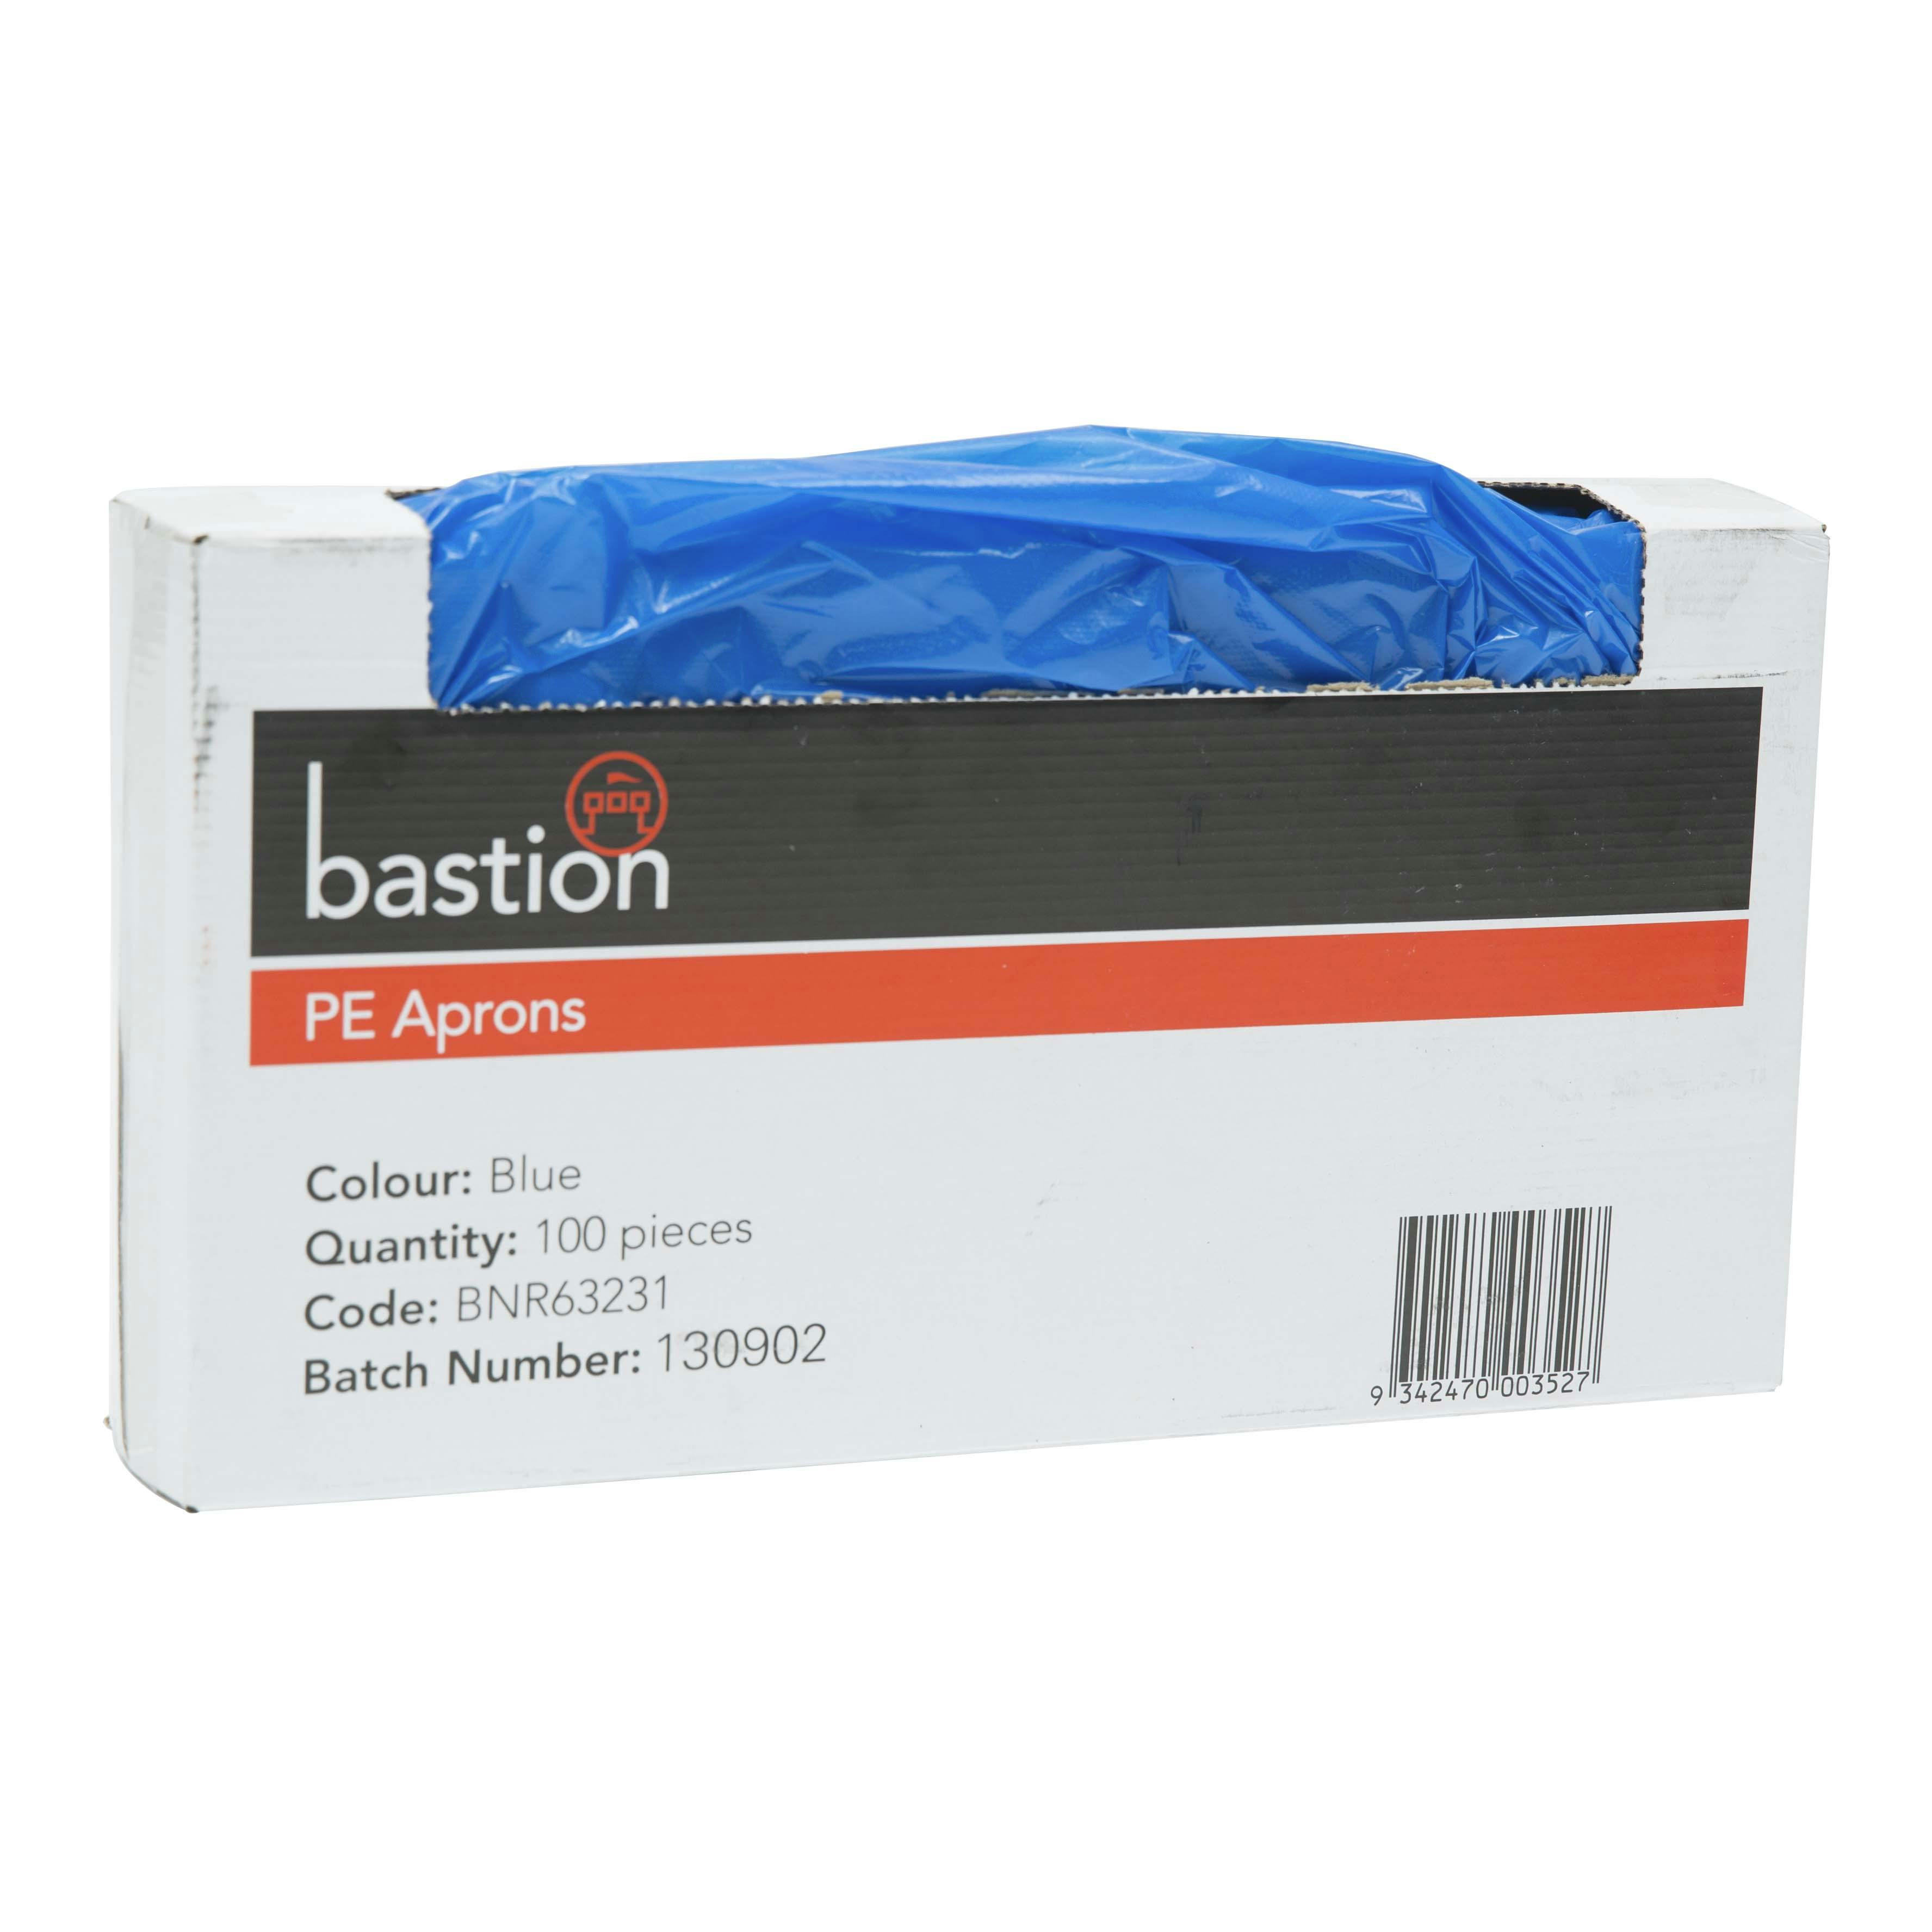 Bastion Polyethylene Apron, Dispenser Box